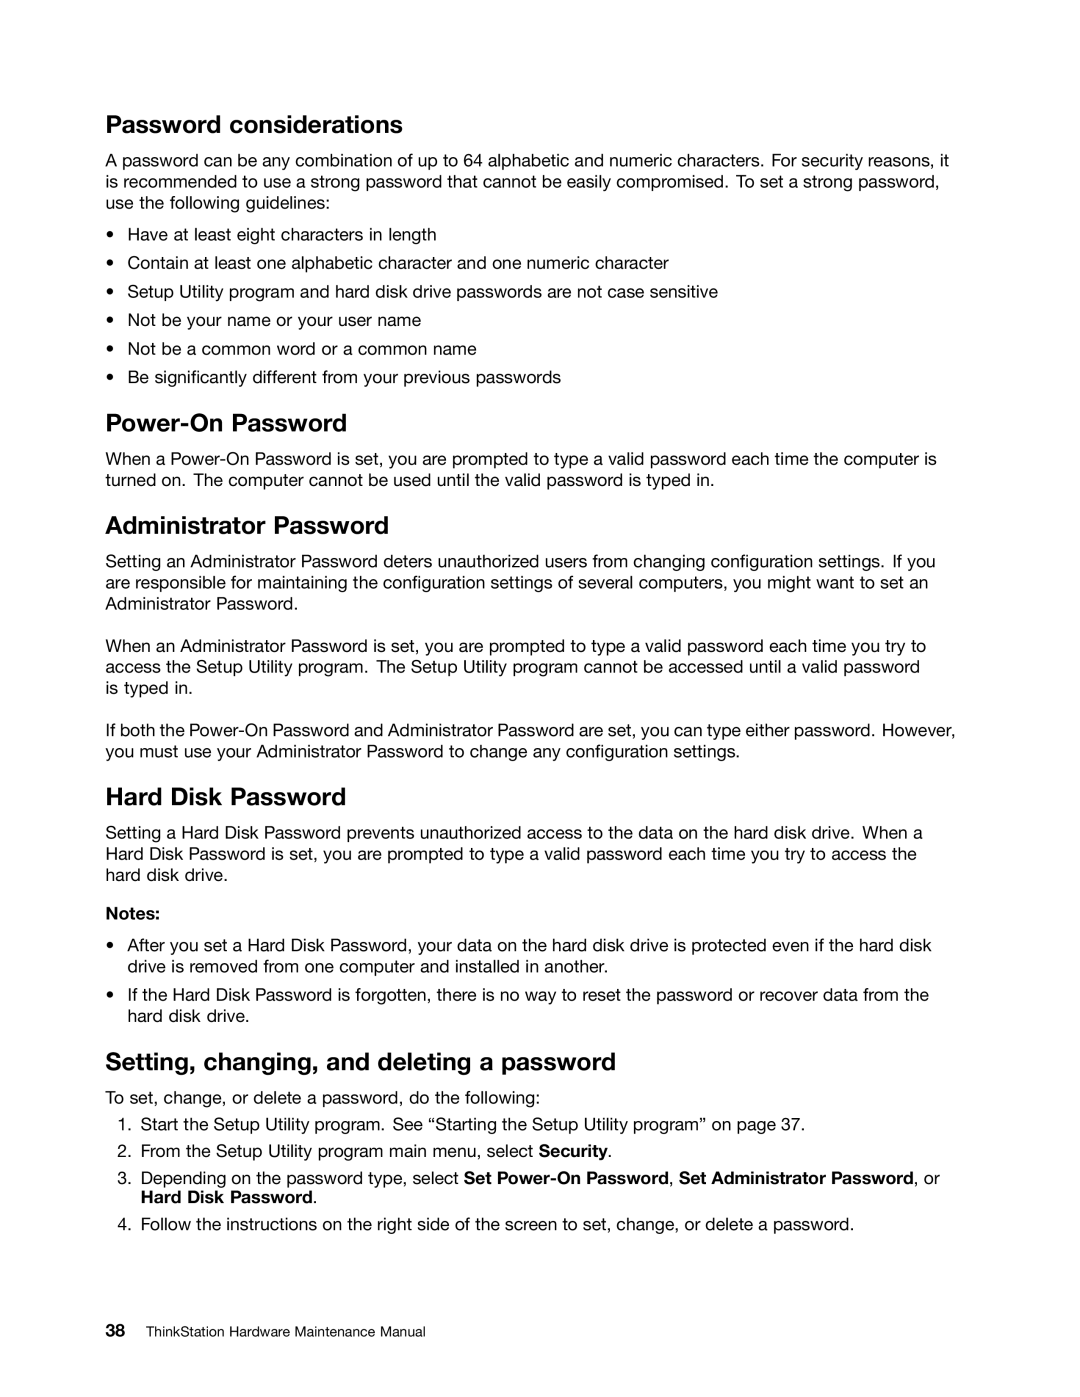 Lenovo 4229, 4223, 4228 manual Password considerations, Power-On Password, Administrator Password, Hard Disk Password 